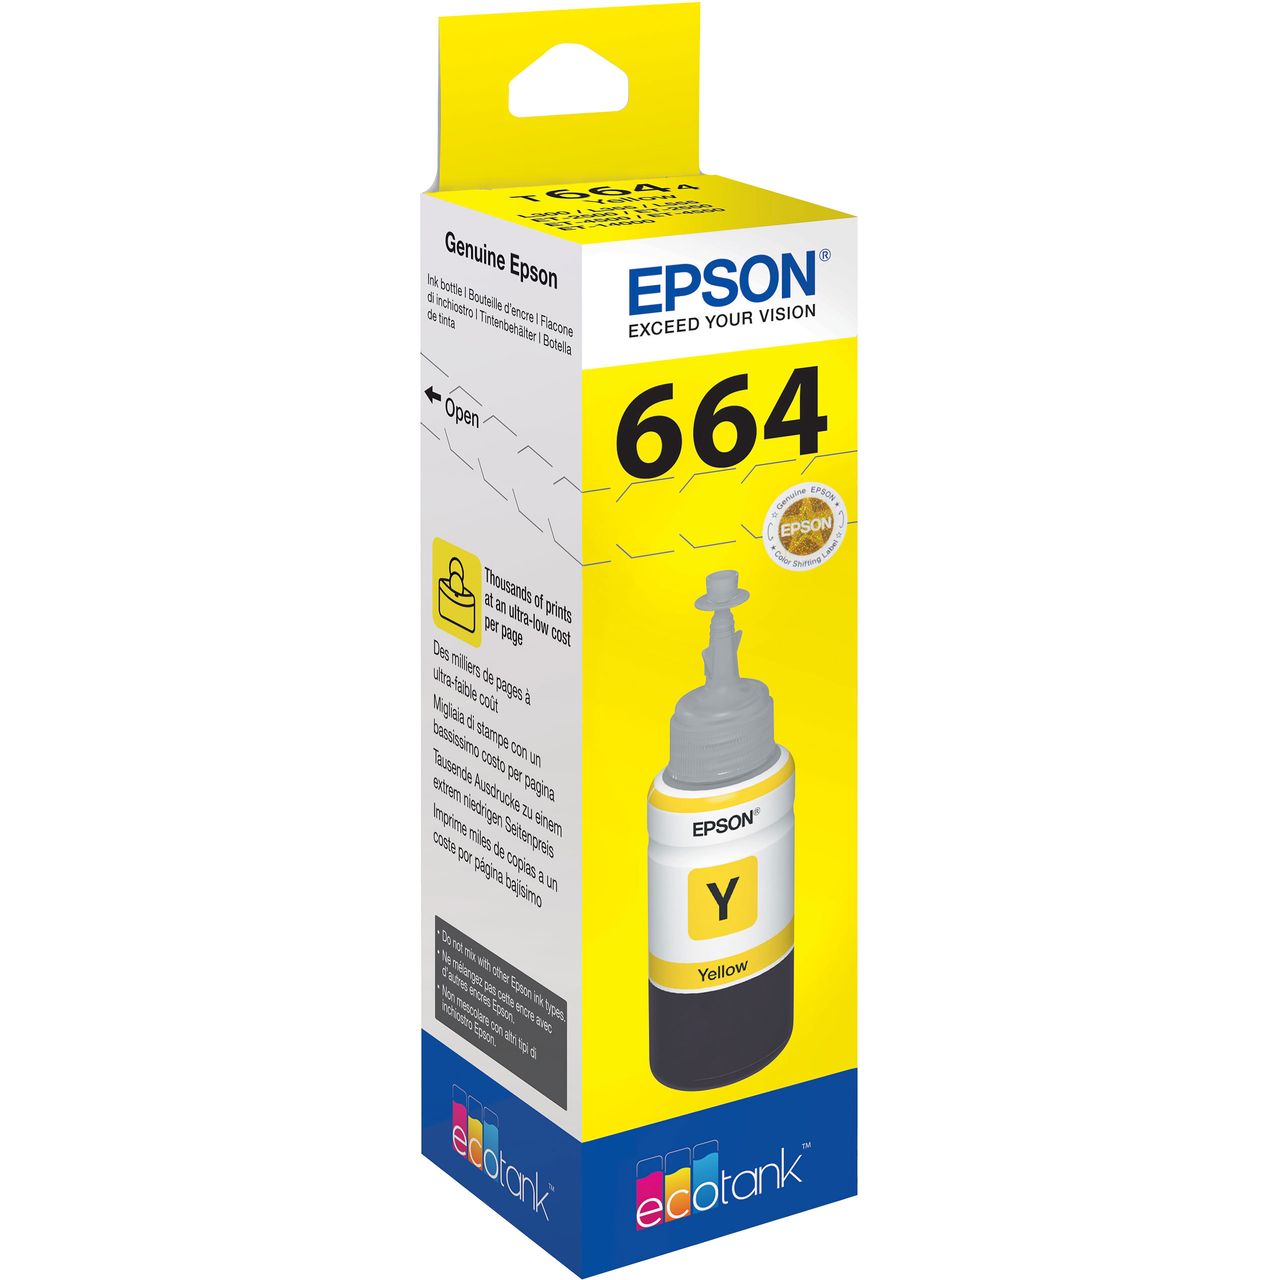 Epson EcoTank Yellow Ink Review